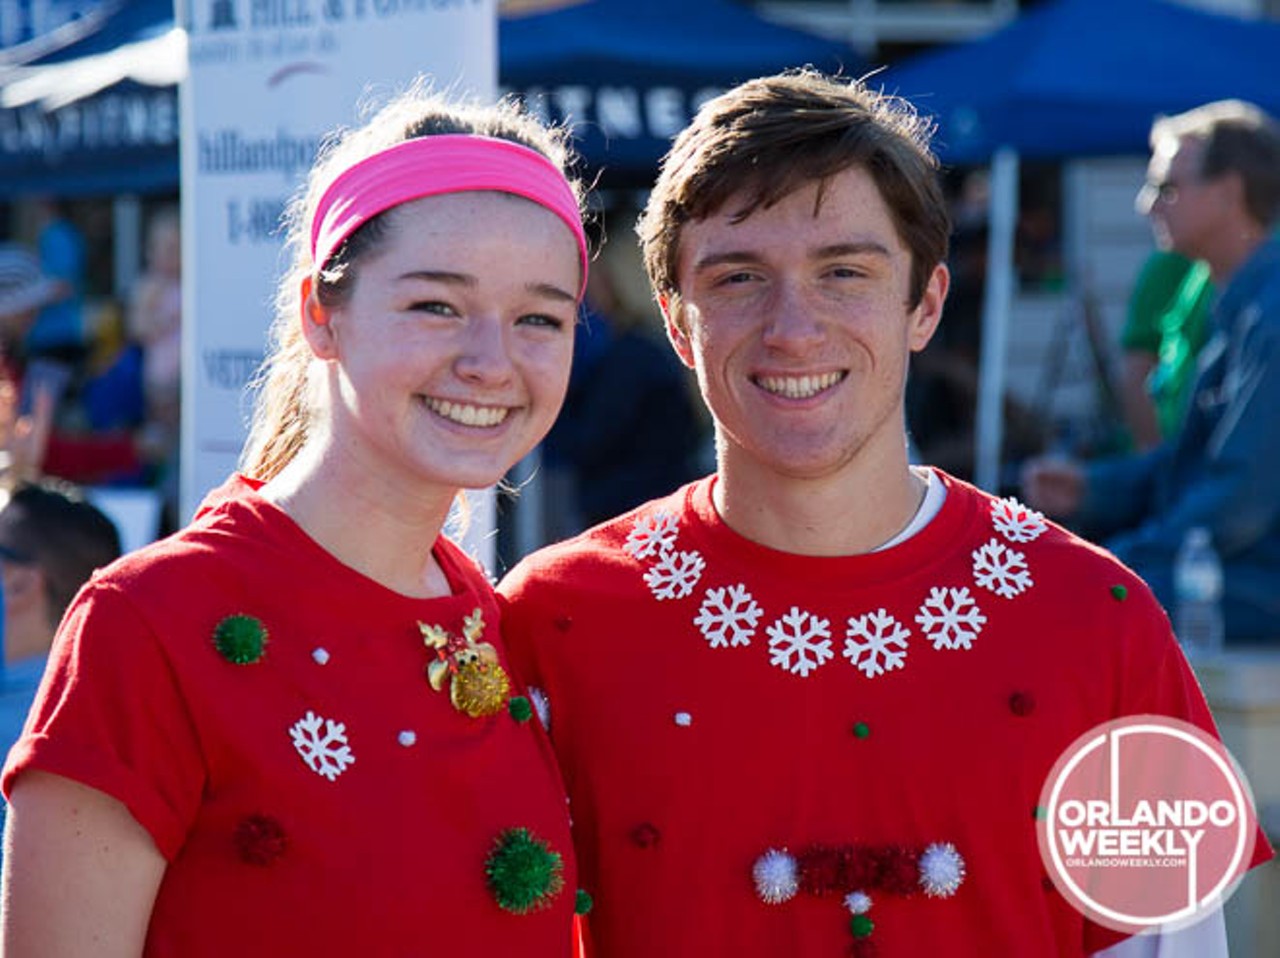 32 merry photos from the Jingle Bell Run/Walk for Arthritis